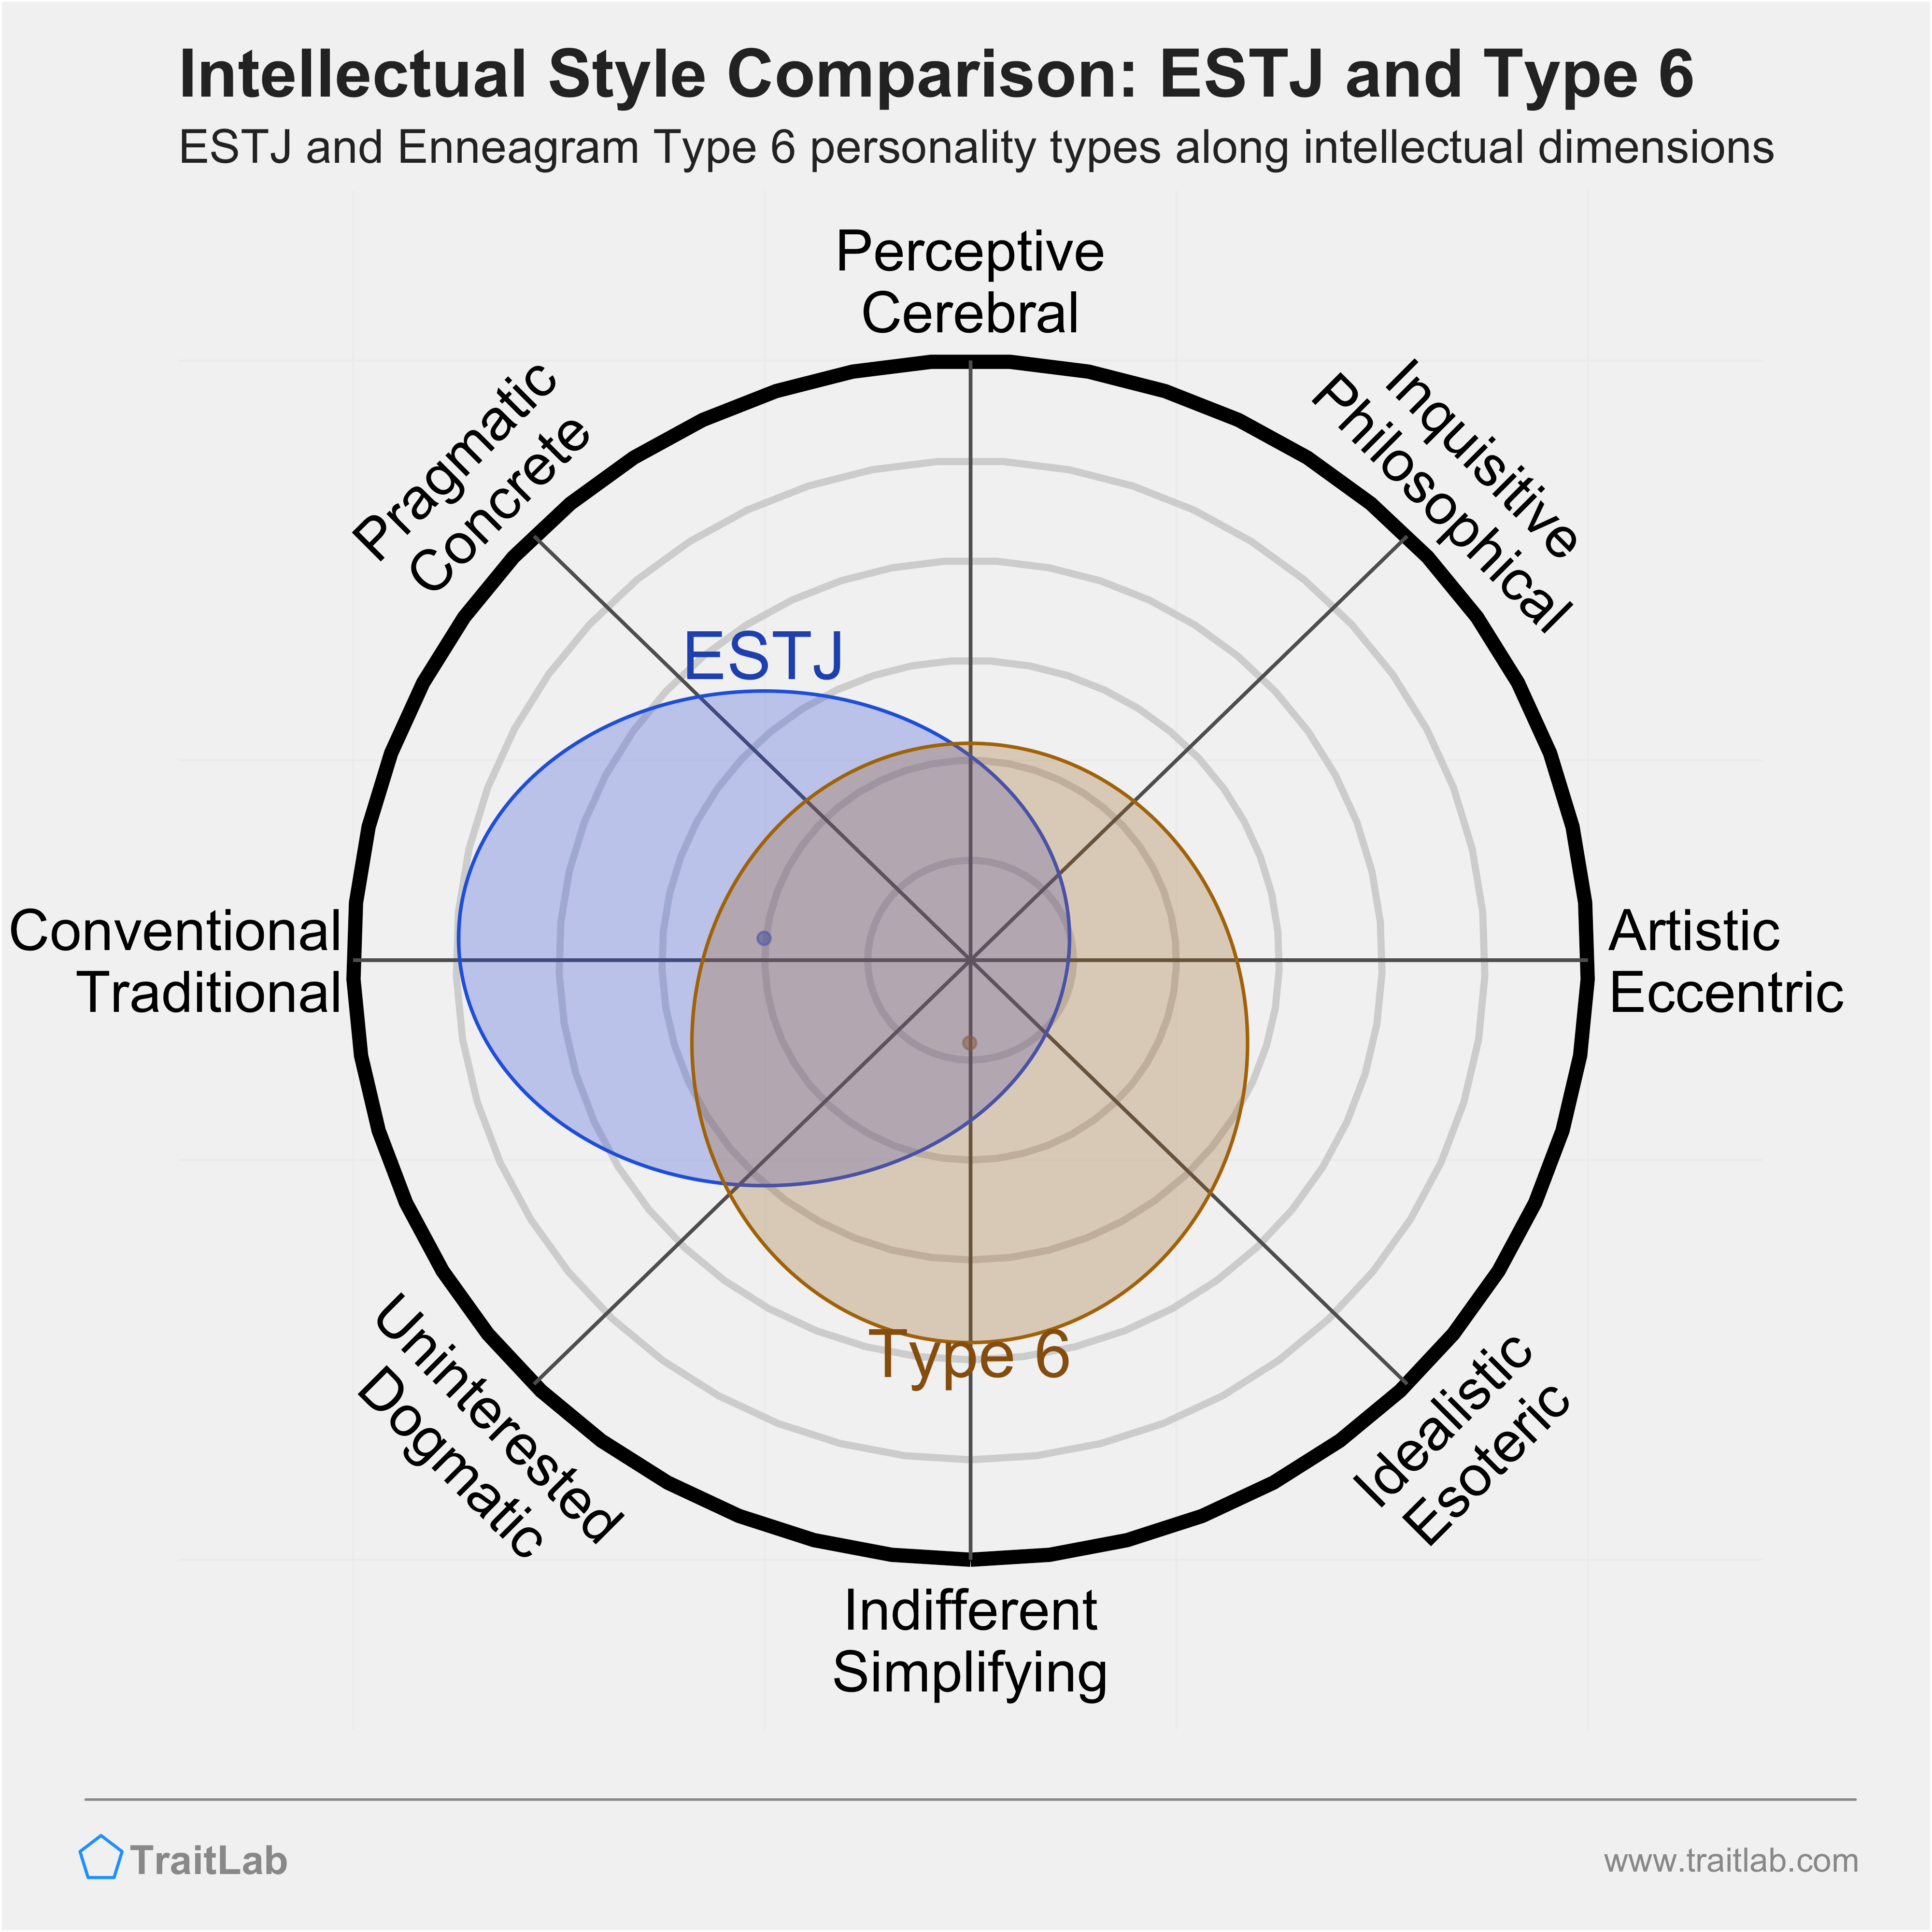 ESTJ and Type 6 comparison across intellectual dimensions